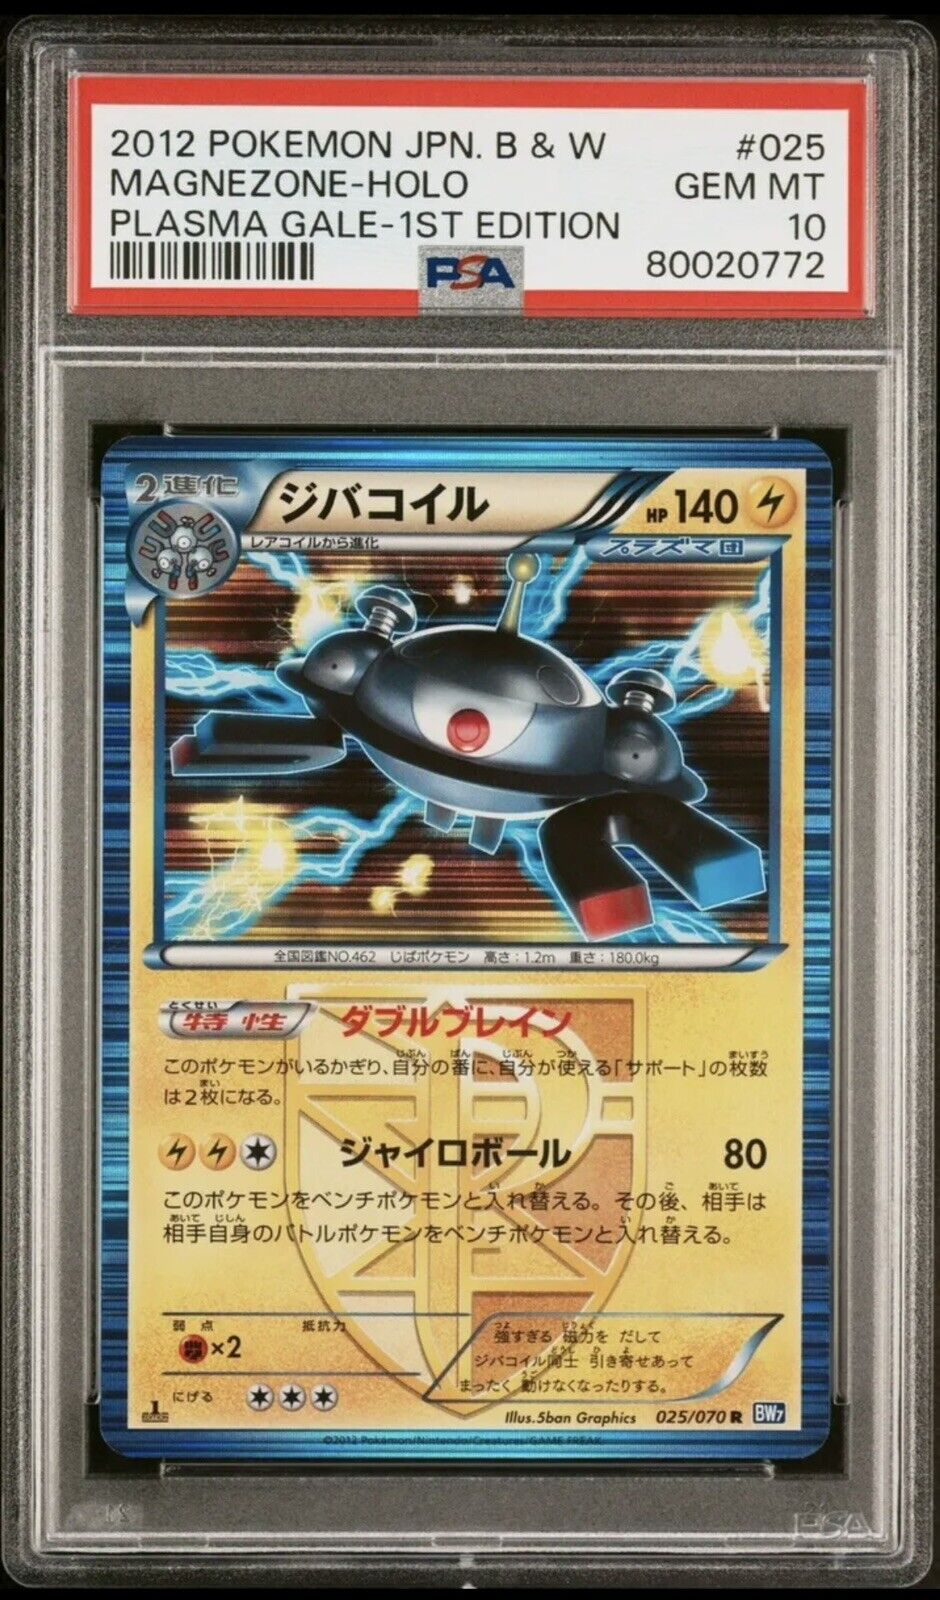 Pokemon - PSA 10 - Magnezone 025/070 R Plasma Gale 1st Edition Japanese Card